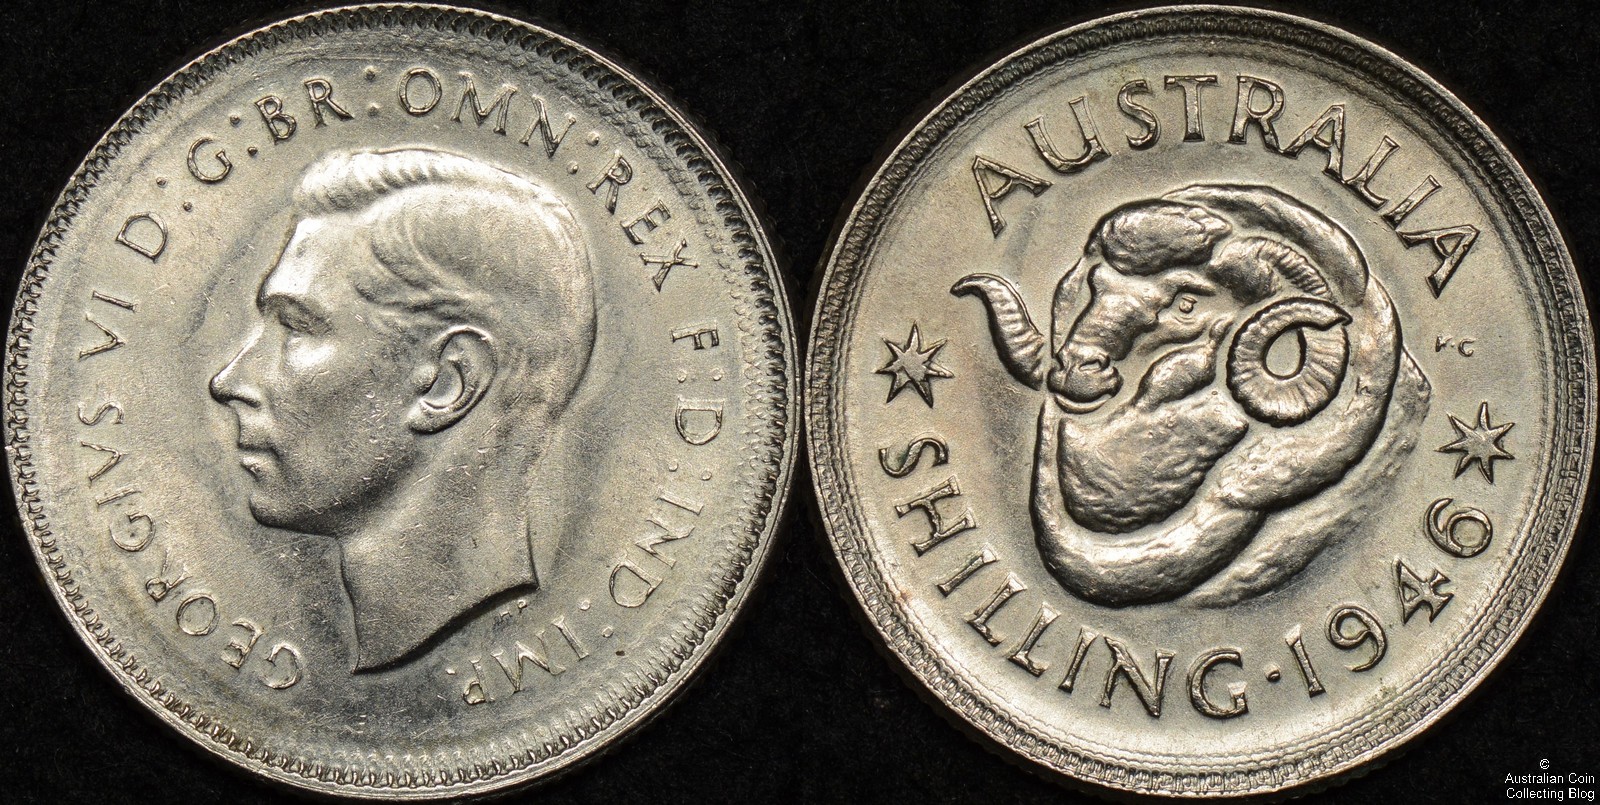 1946 shilling struck multiple times